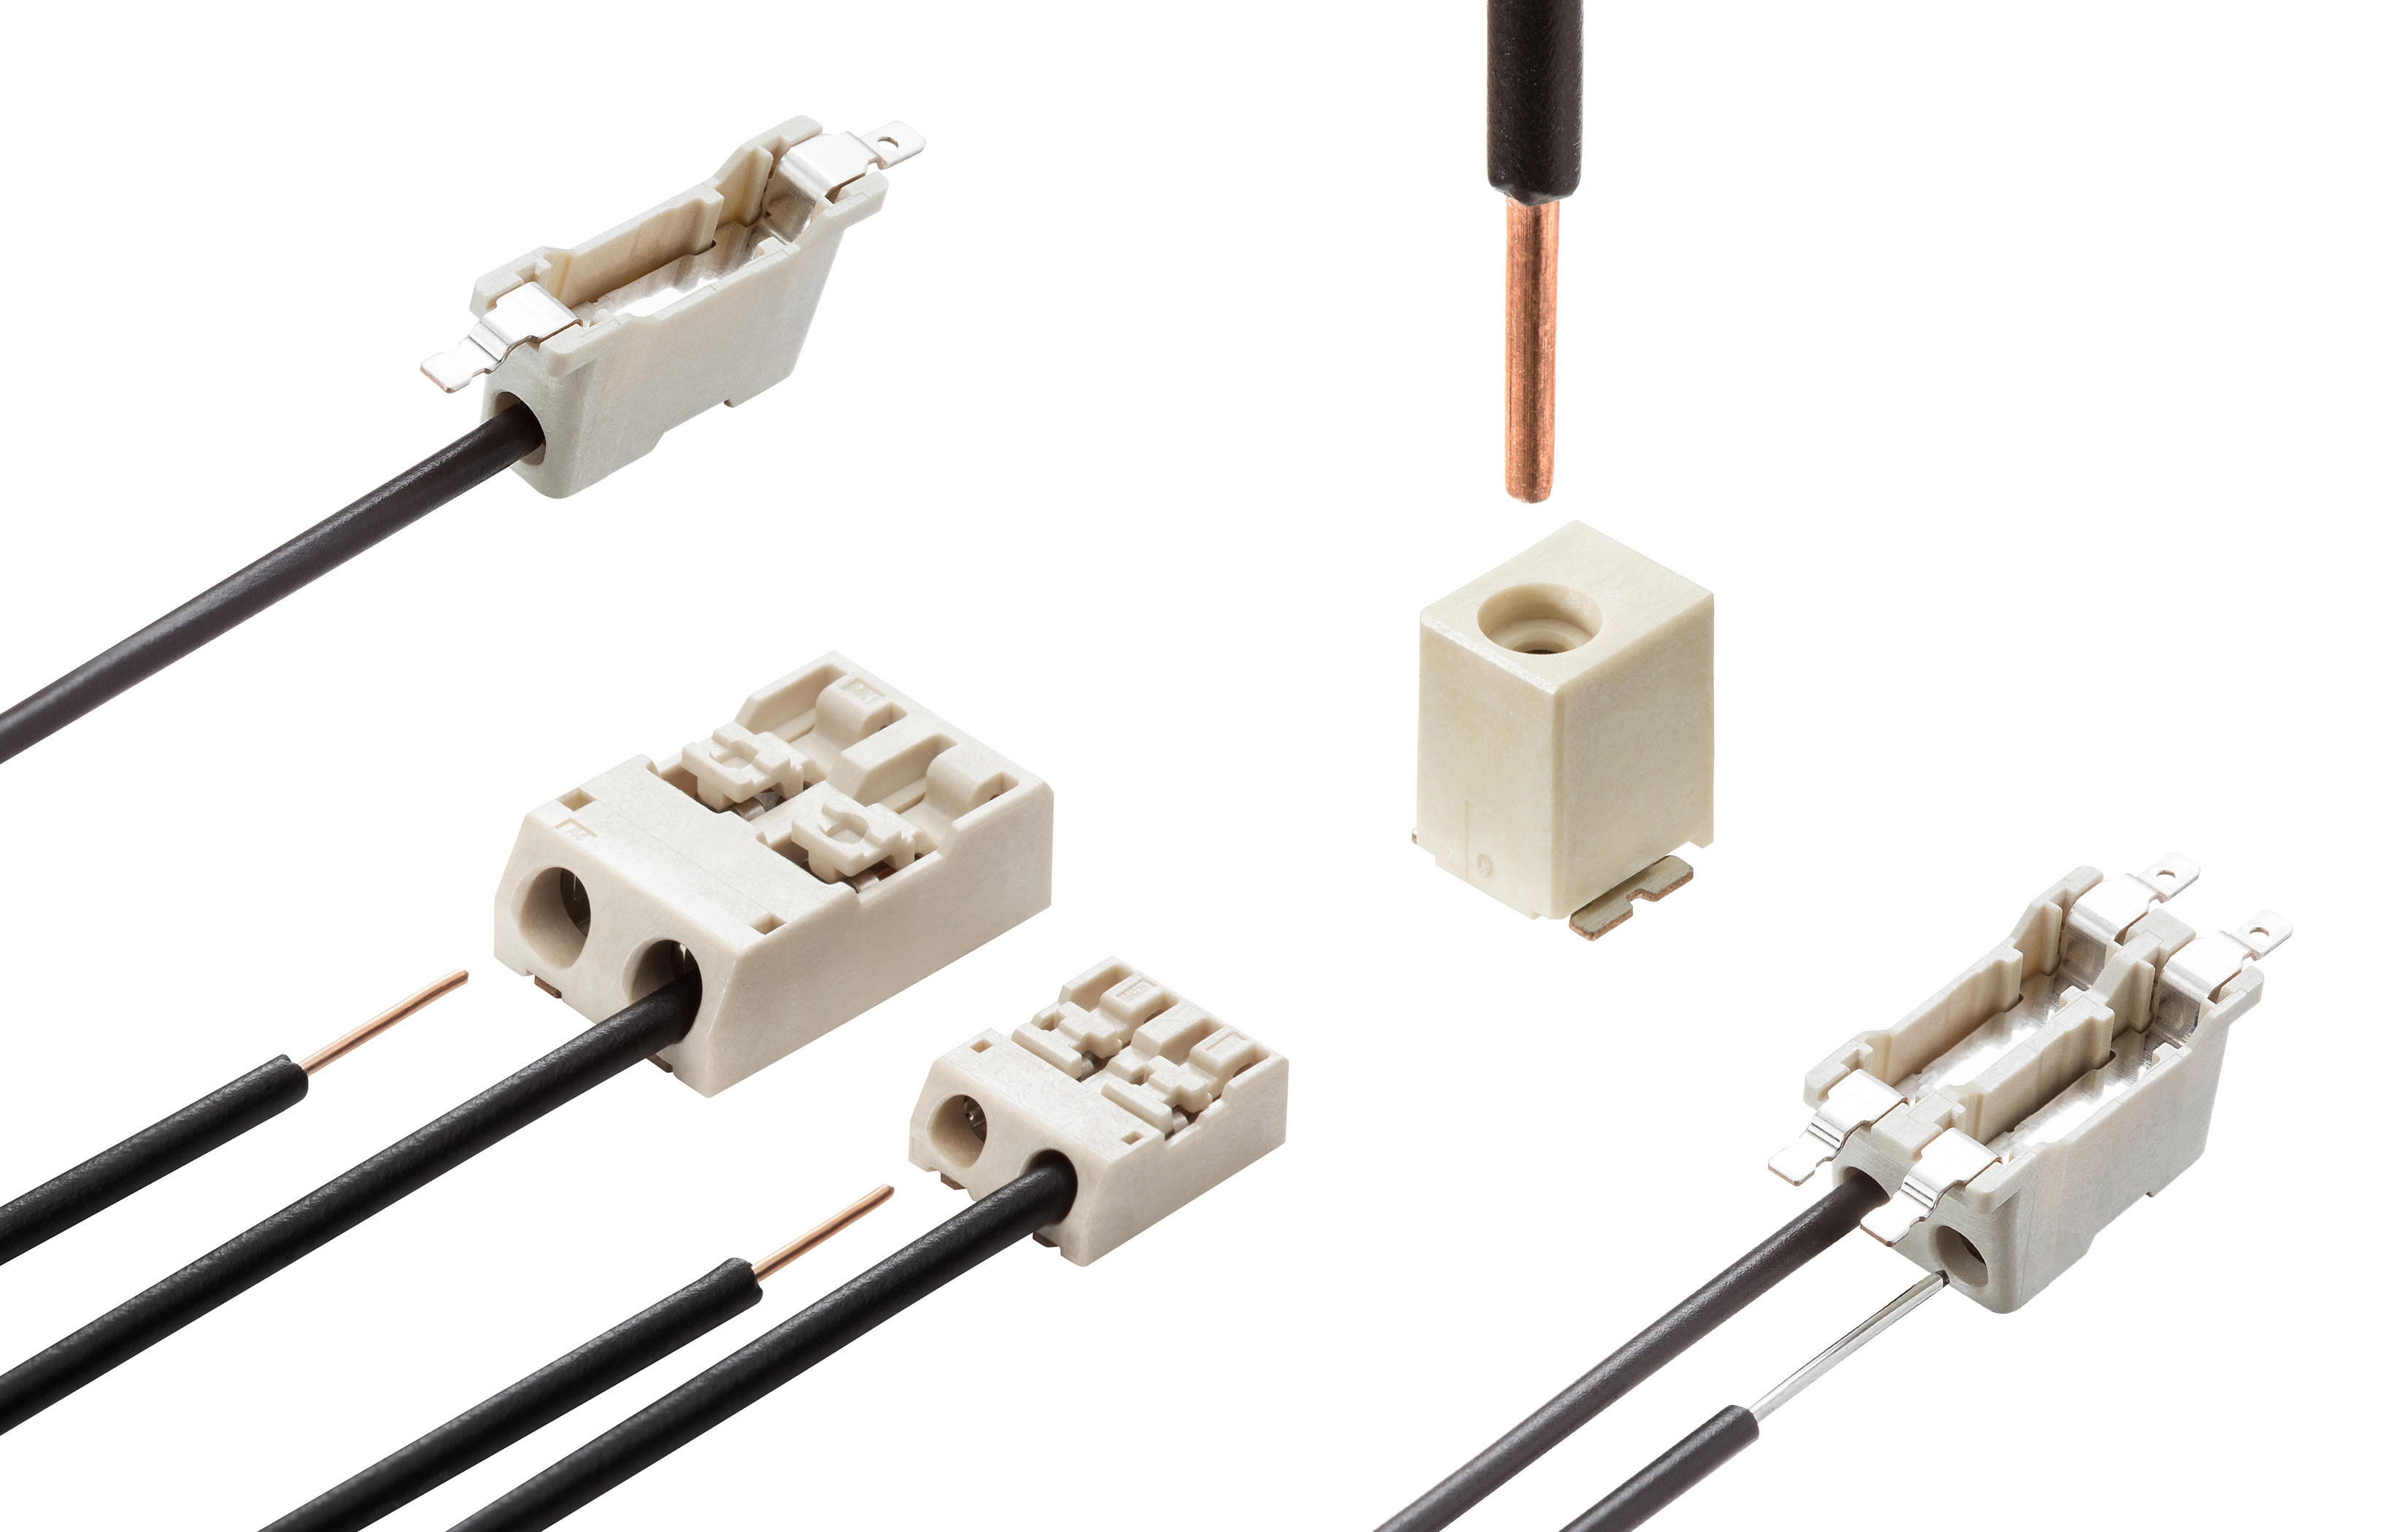 LED connectors from Molex LiteTrap family